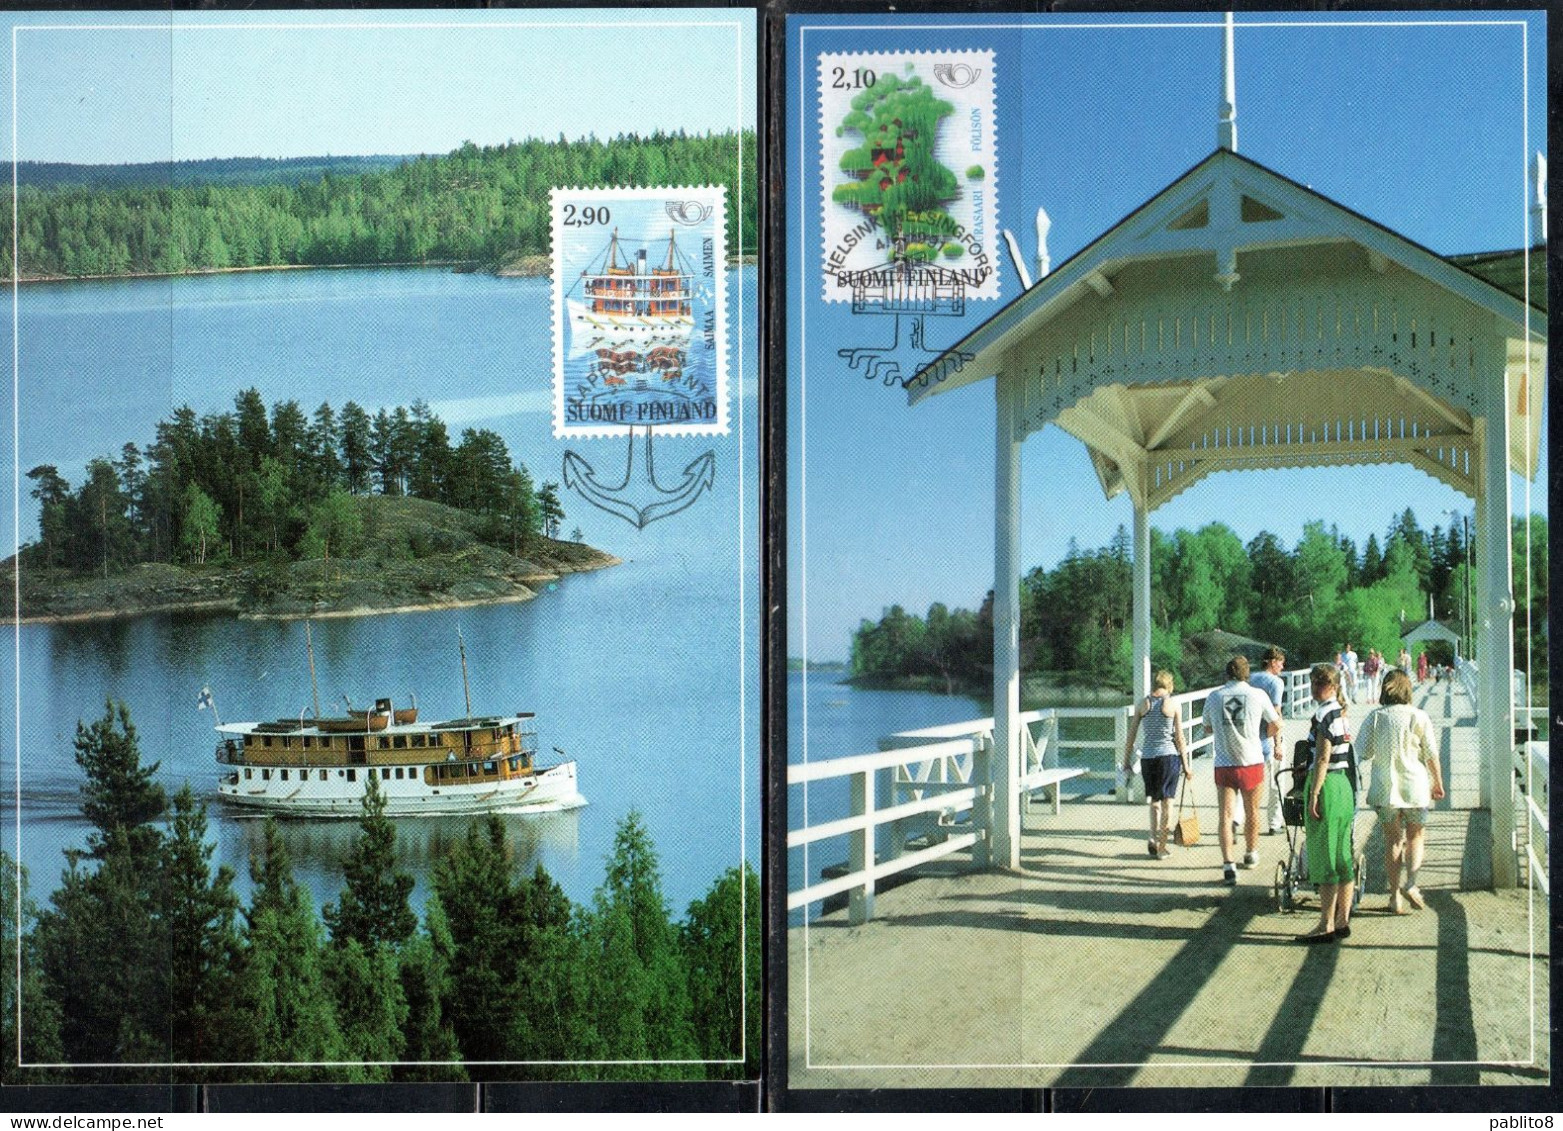 SUOMI FINLAND FINLANDIA FINLANDE 1991 TOURISM COMPLETE SET SERIE COMPLETA MAXI MAXIMUM CARD - Maximum Cards & Covers